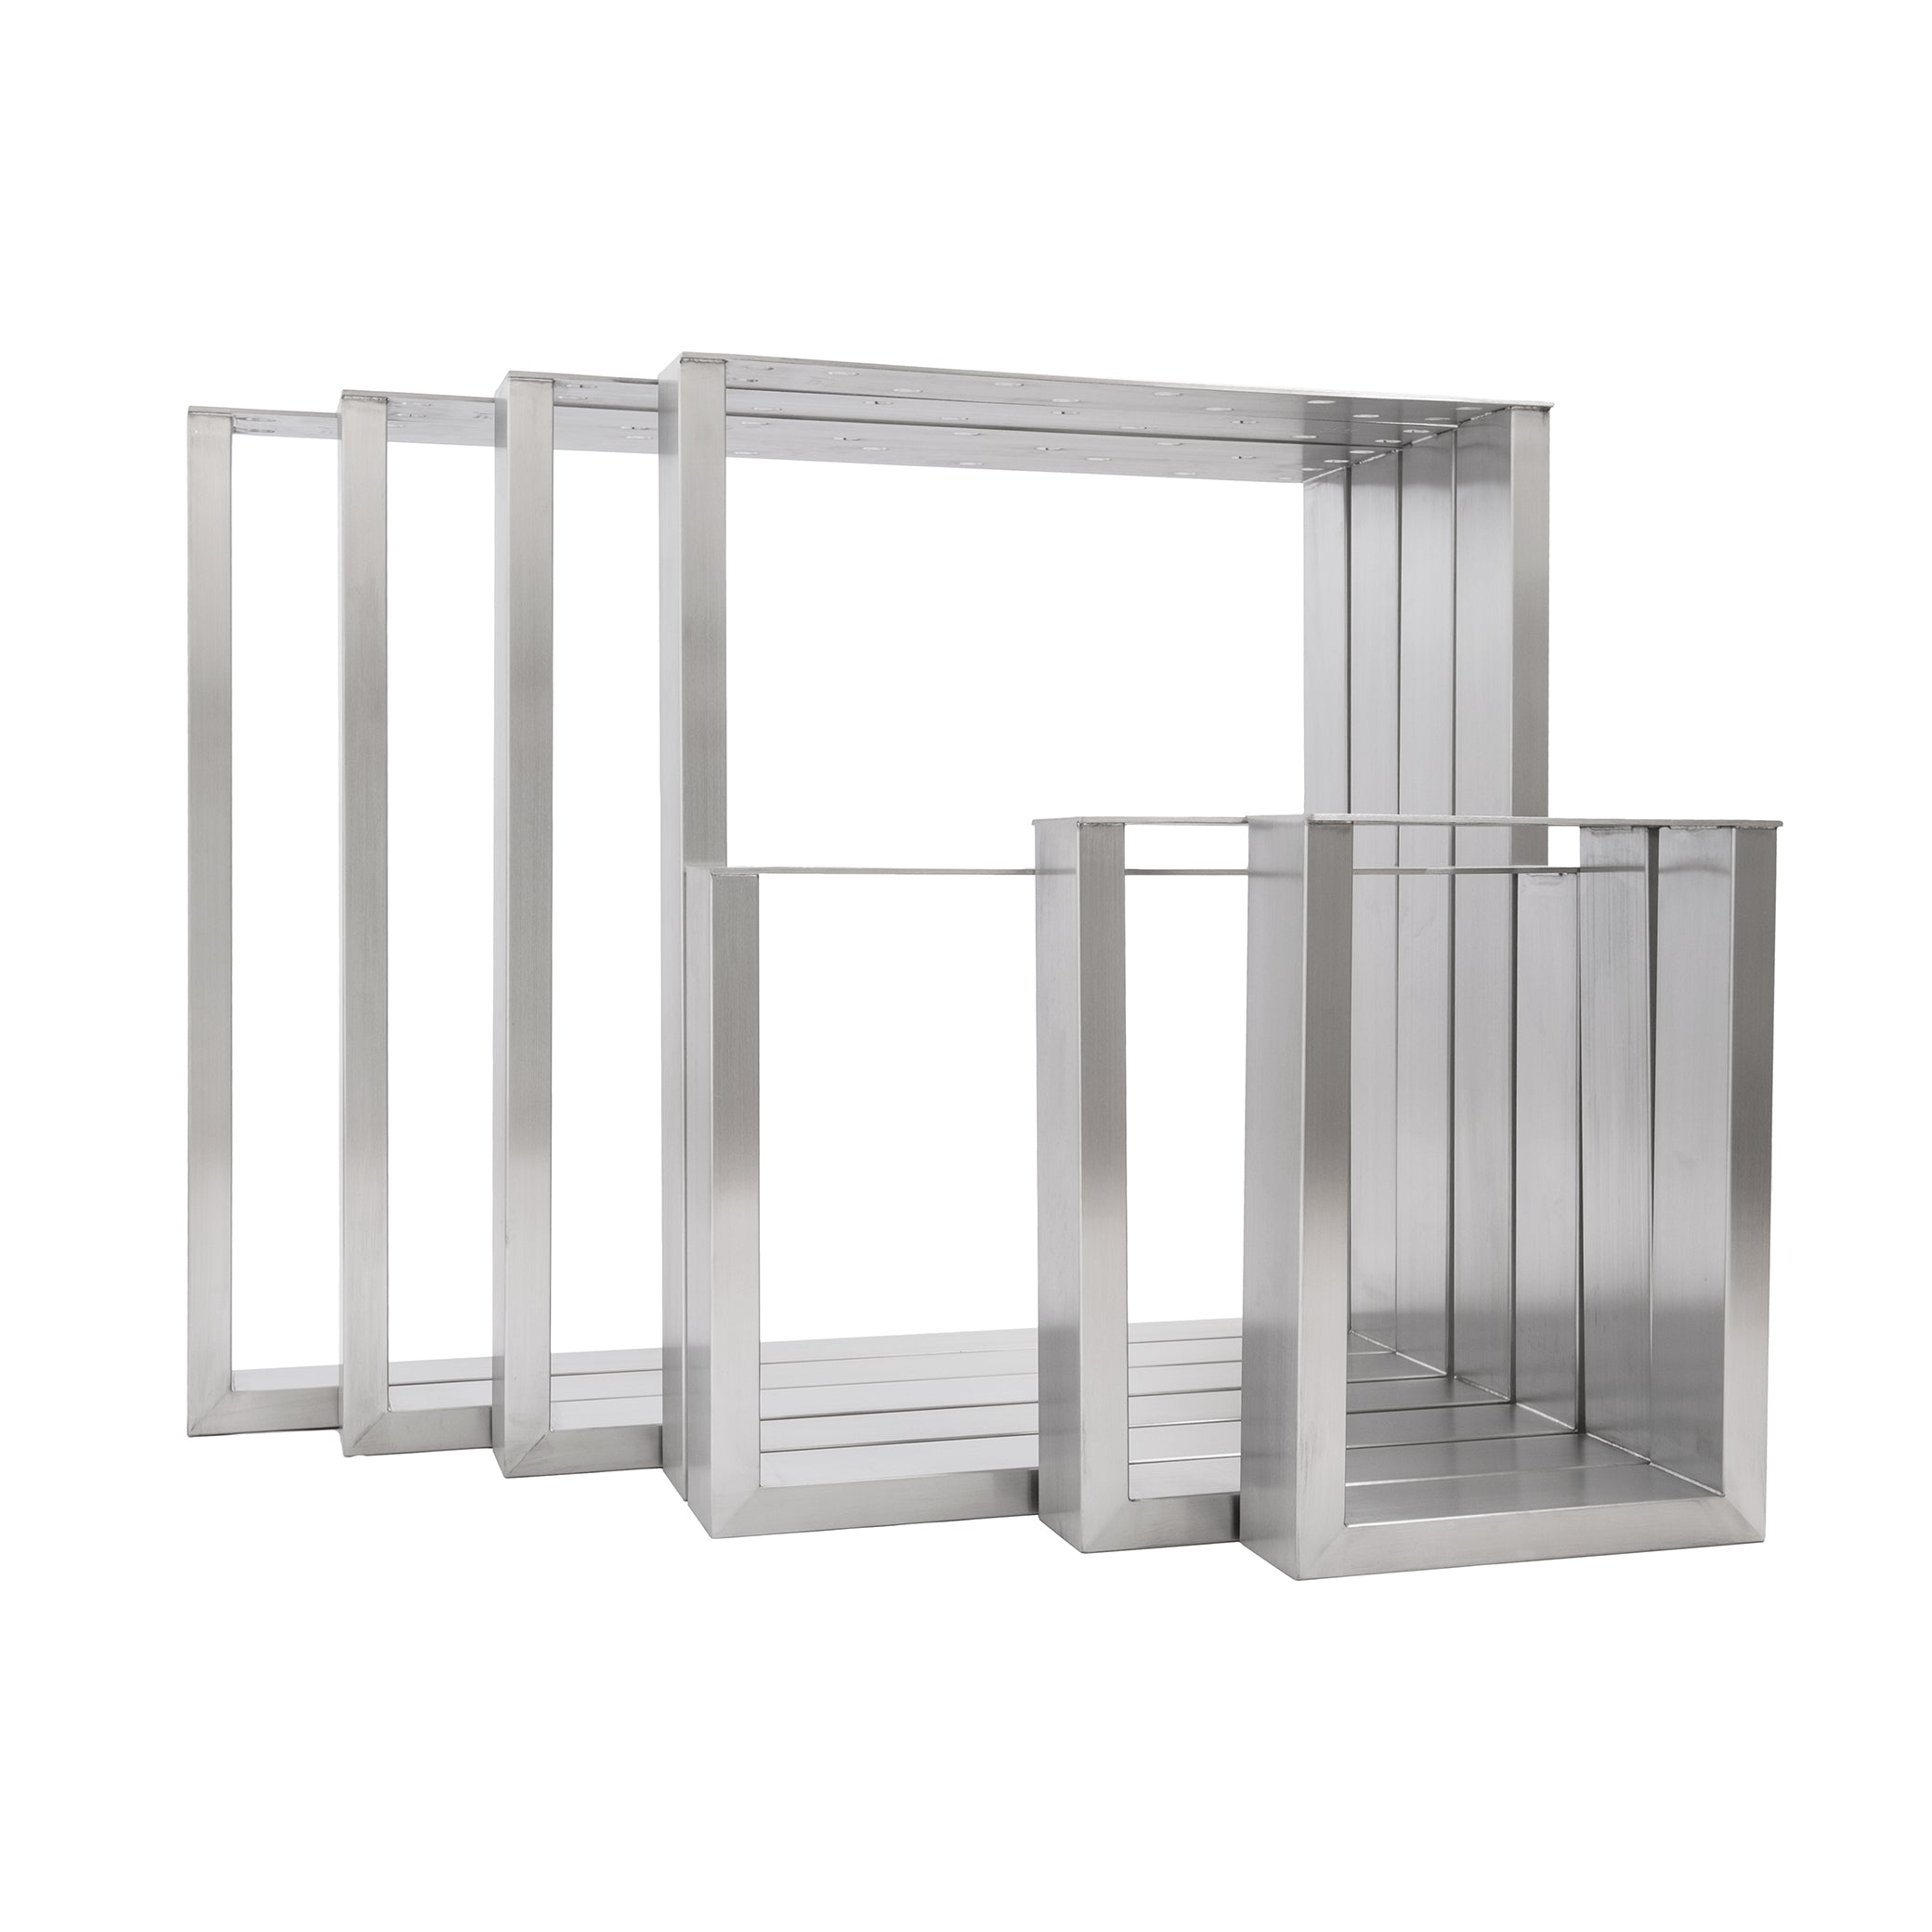 2 Set Möbelkufen Rectangle - stainless steel